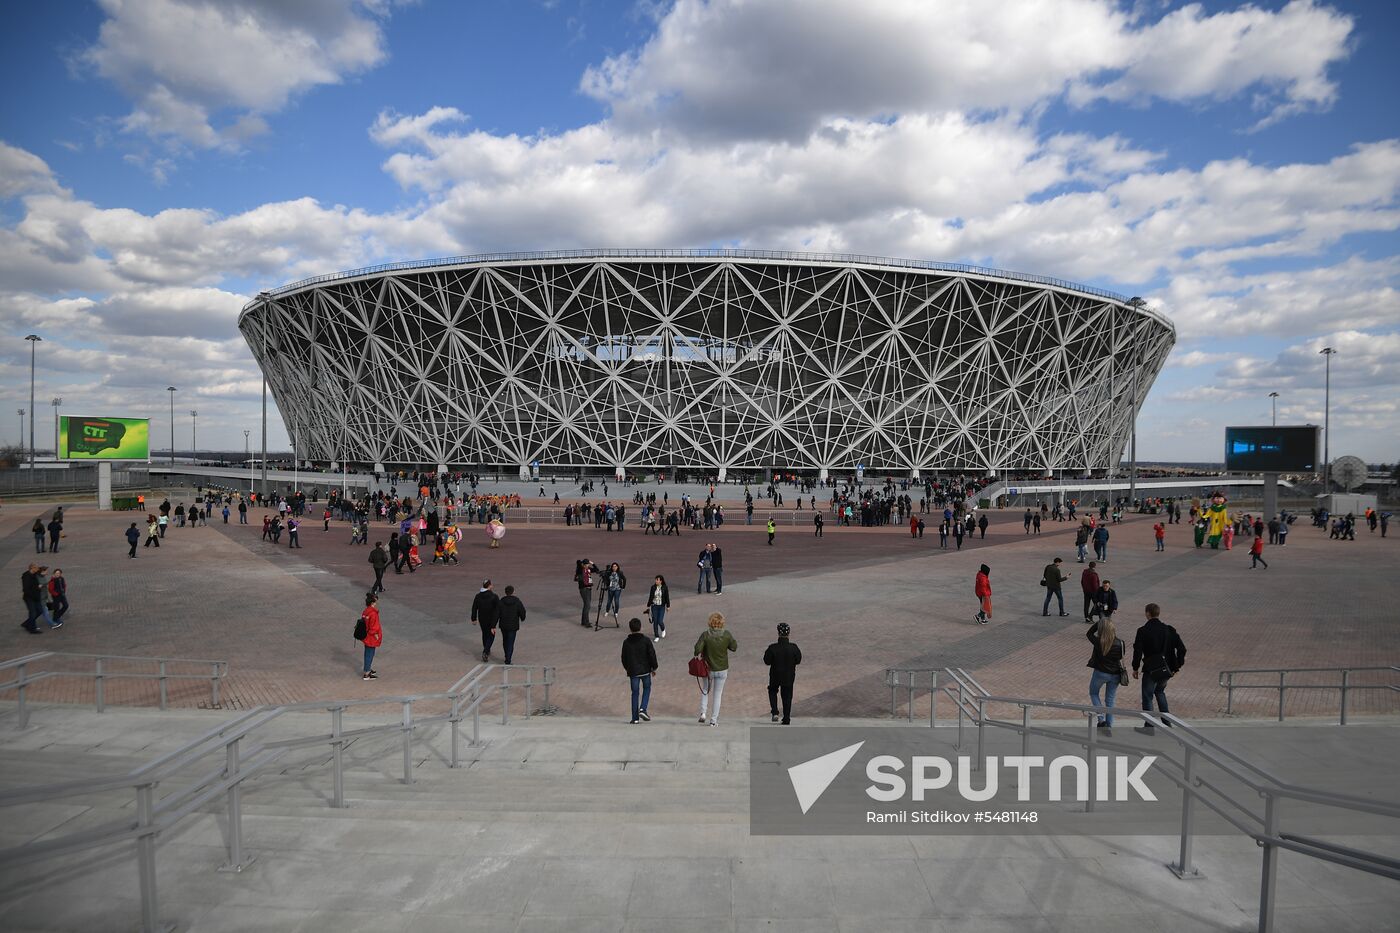 Football. Vogograd Arena hosts first official match